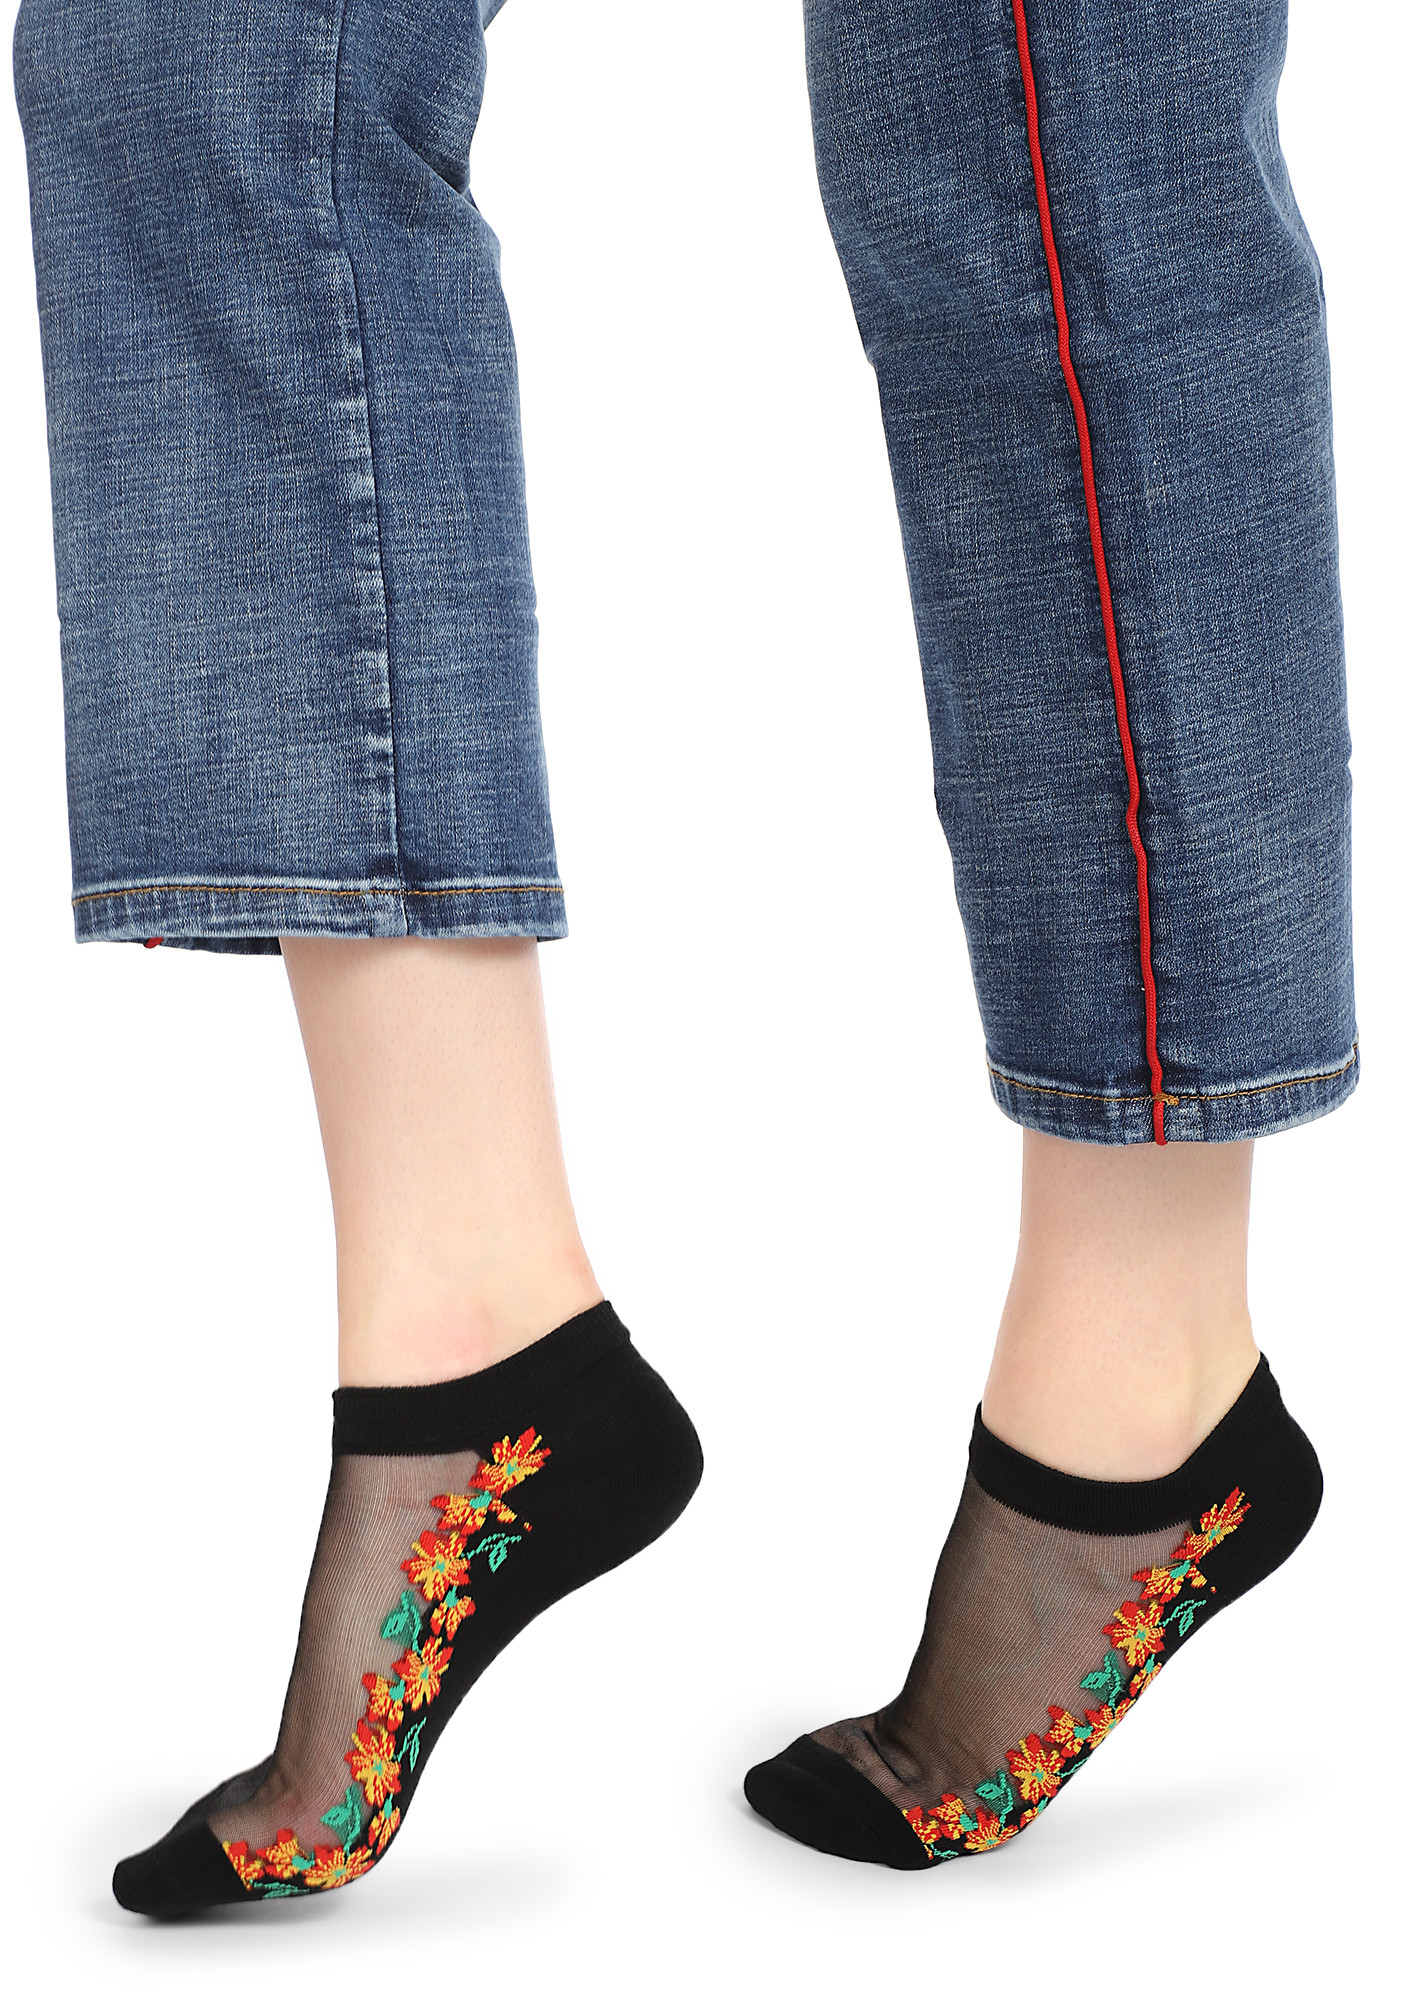 Women Ankle Socks - Buy Women Ankle Socks online in India